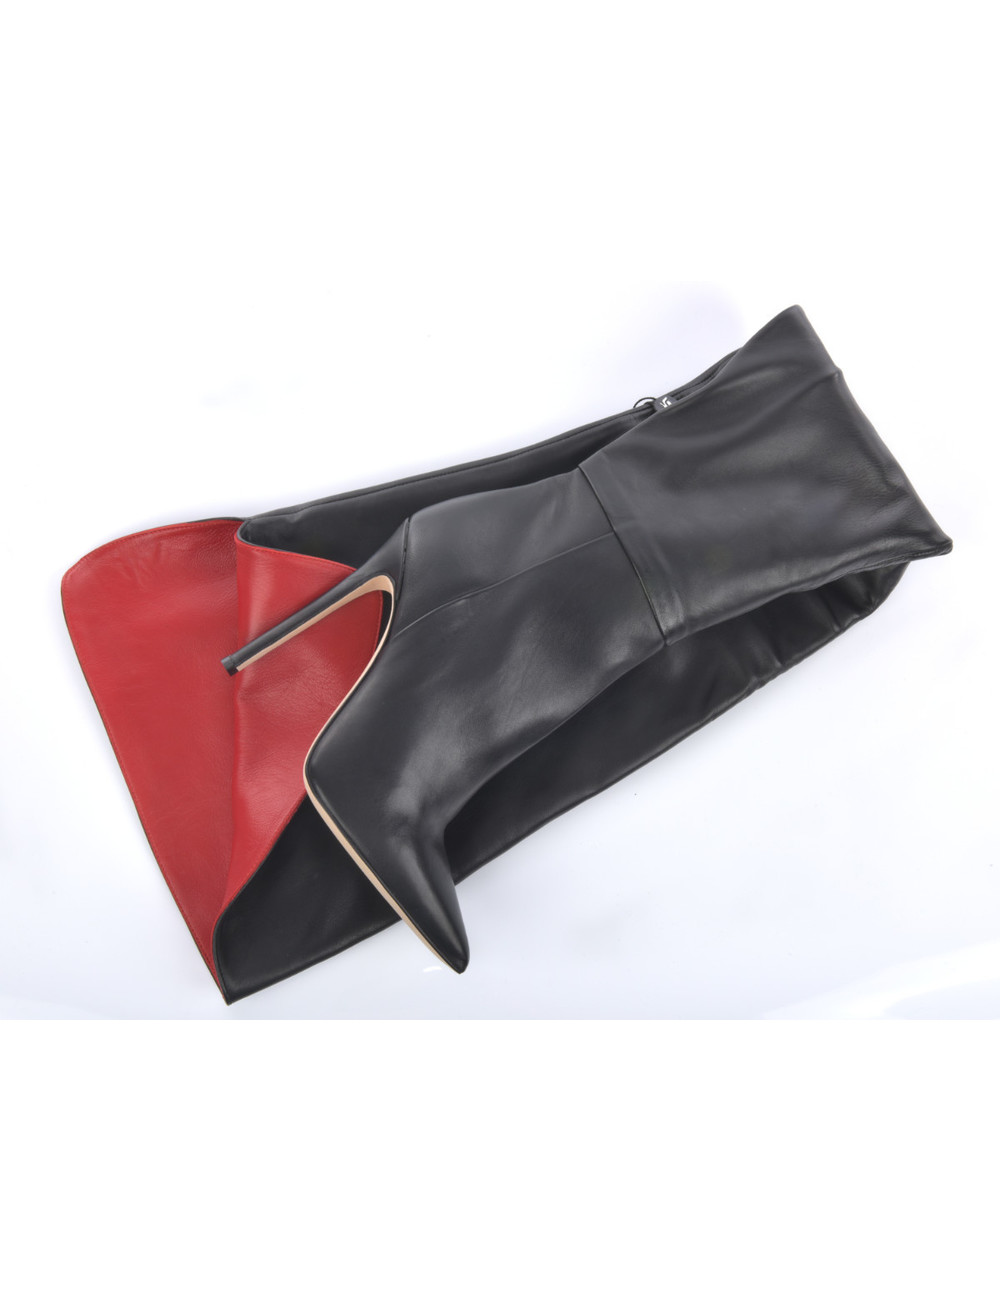 Sanctum  Custom made high Italian crotch boots VESTA with stiletto heels in genuine leather